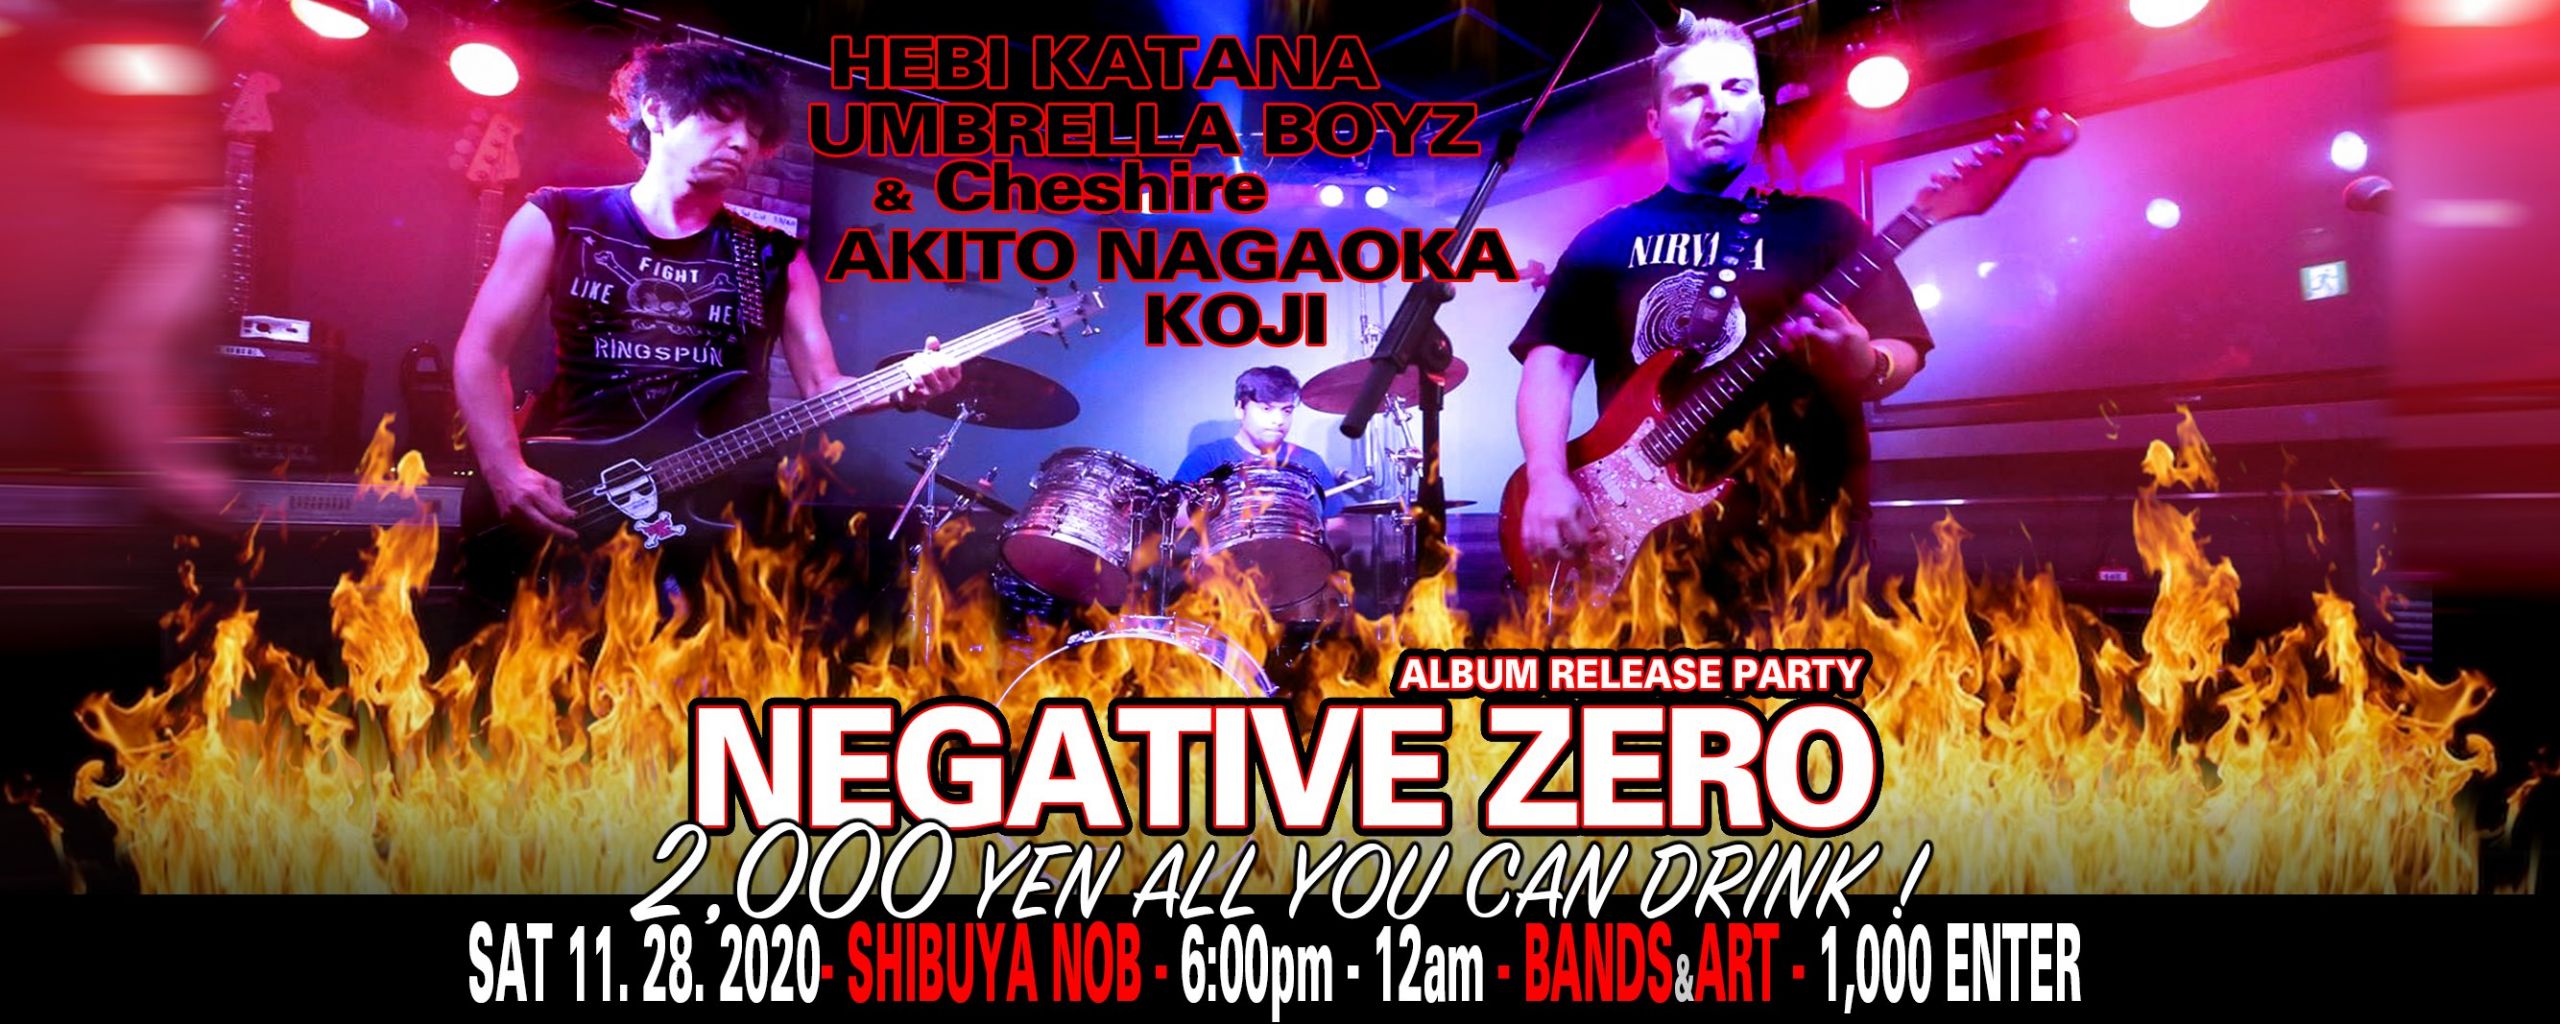 Negative Zero Album Release Party Official Poster